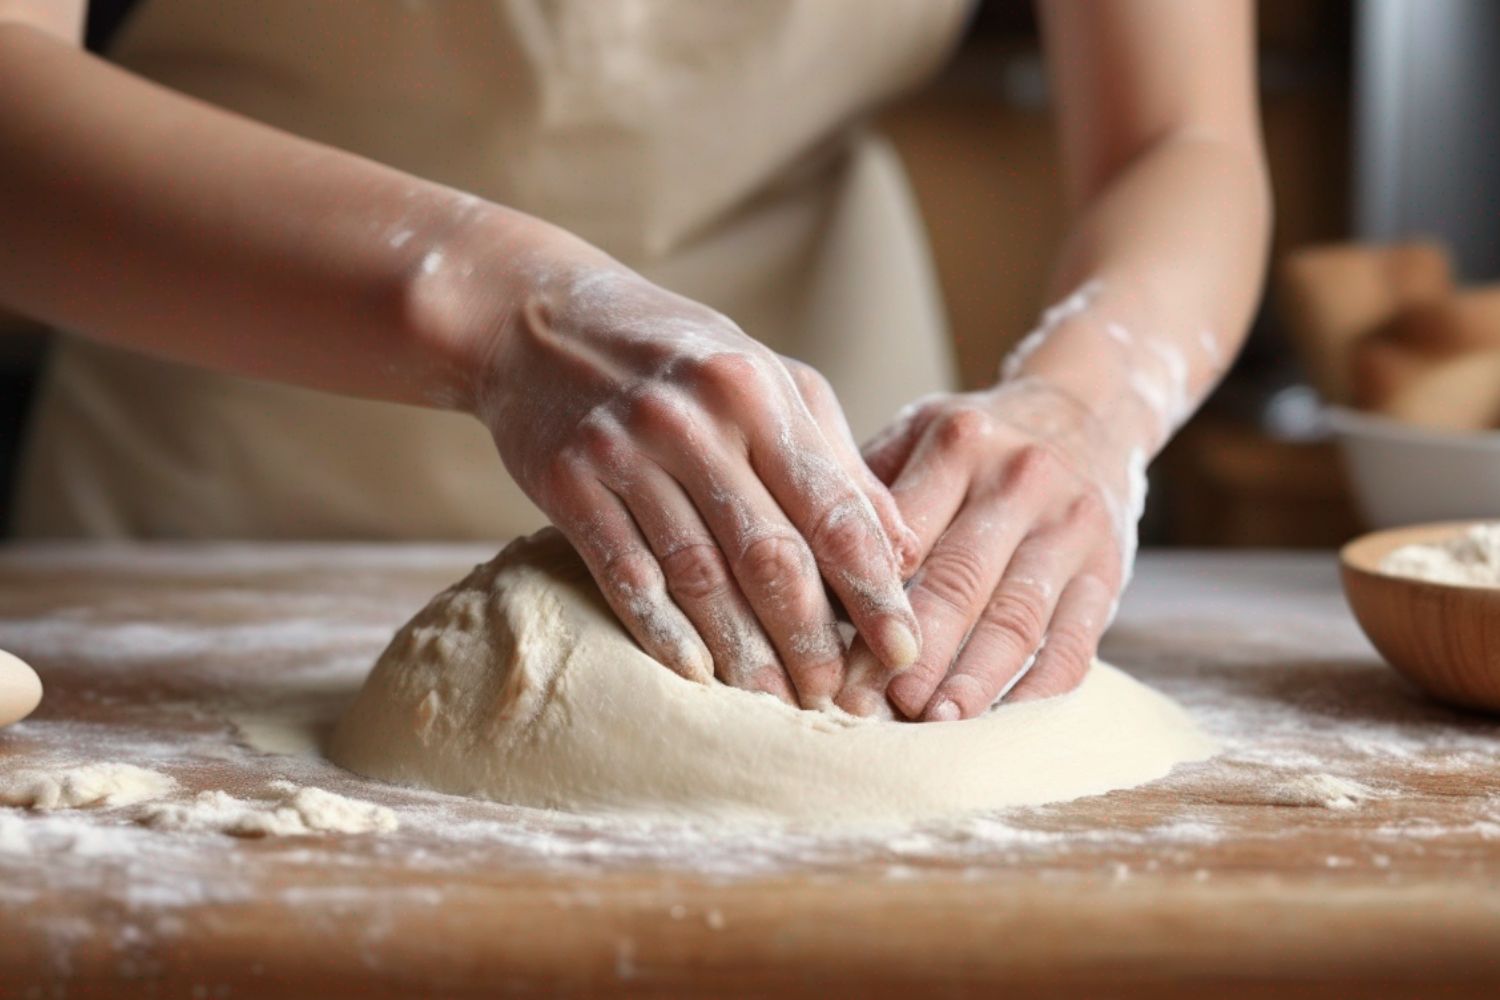 Beste Knettechnik für selbstgebackenes Brot – So gelingt es garantiert!